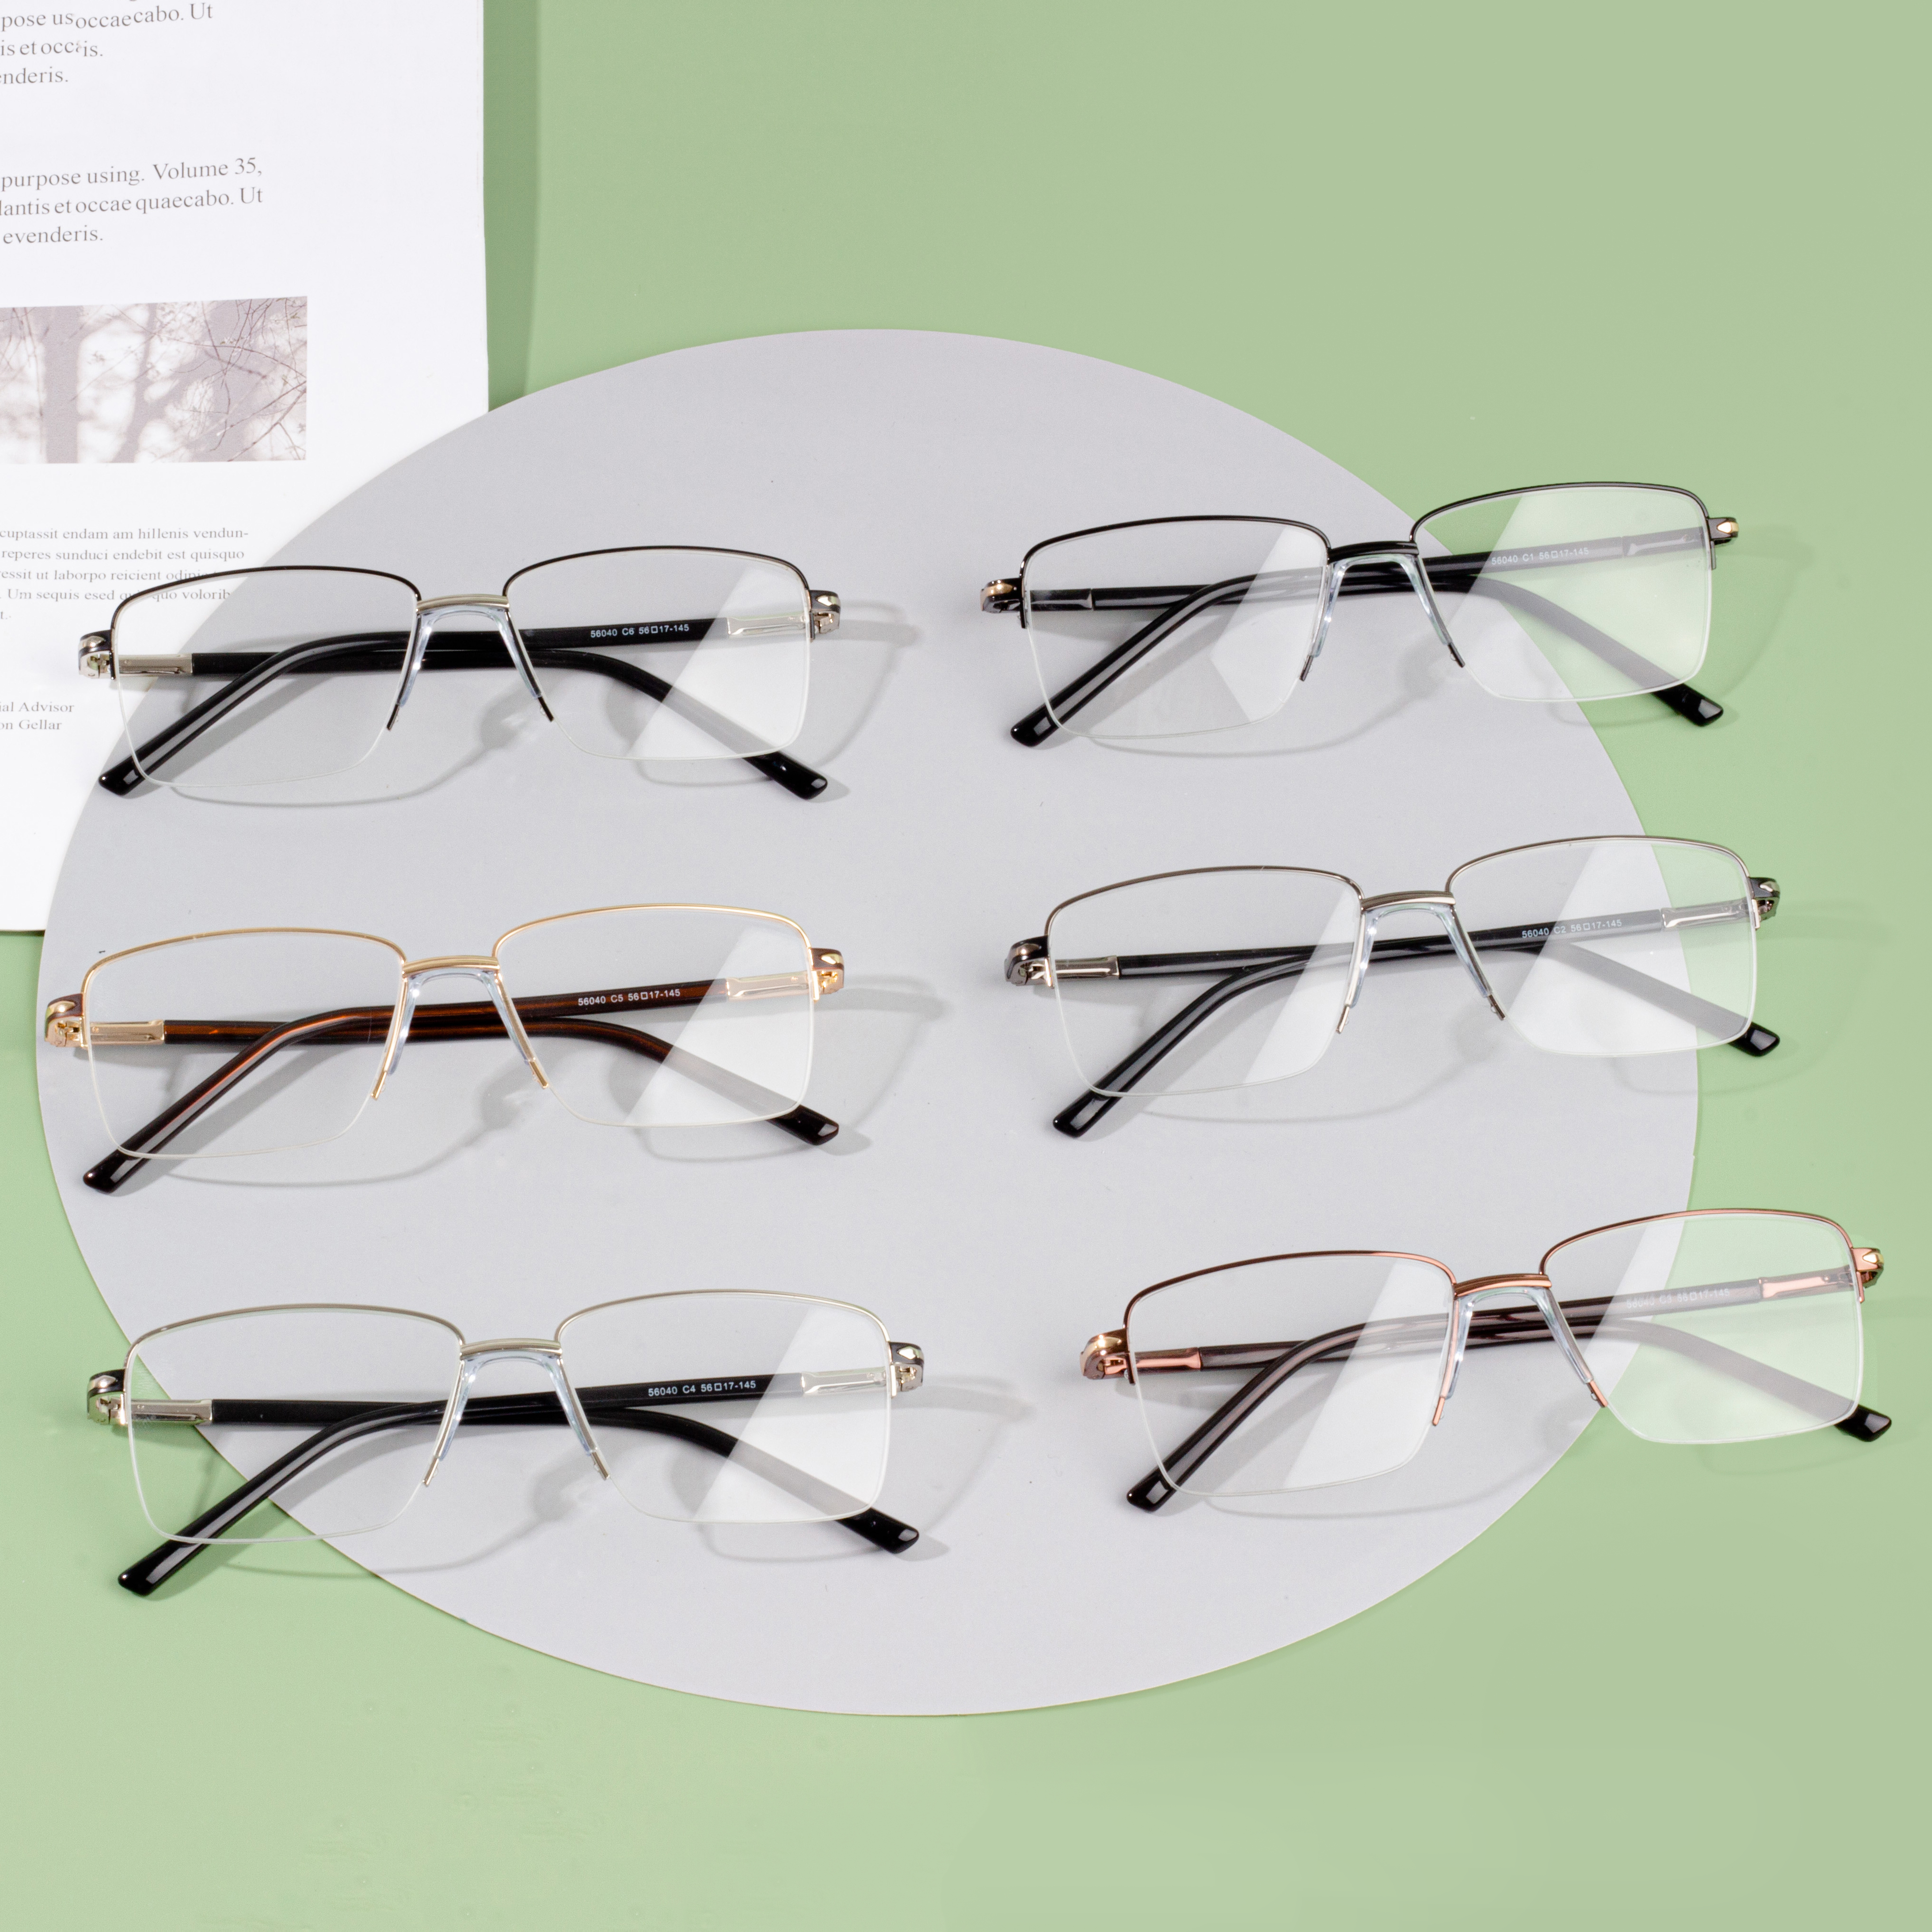 fjouwerkante bril frames